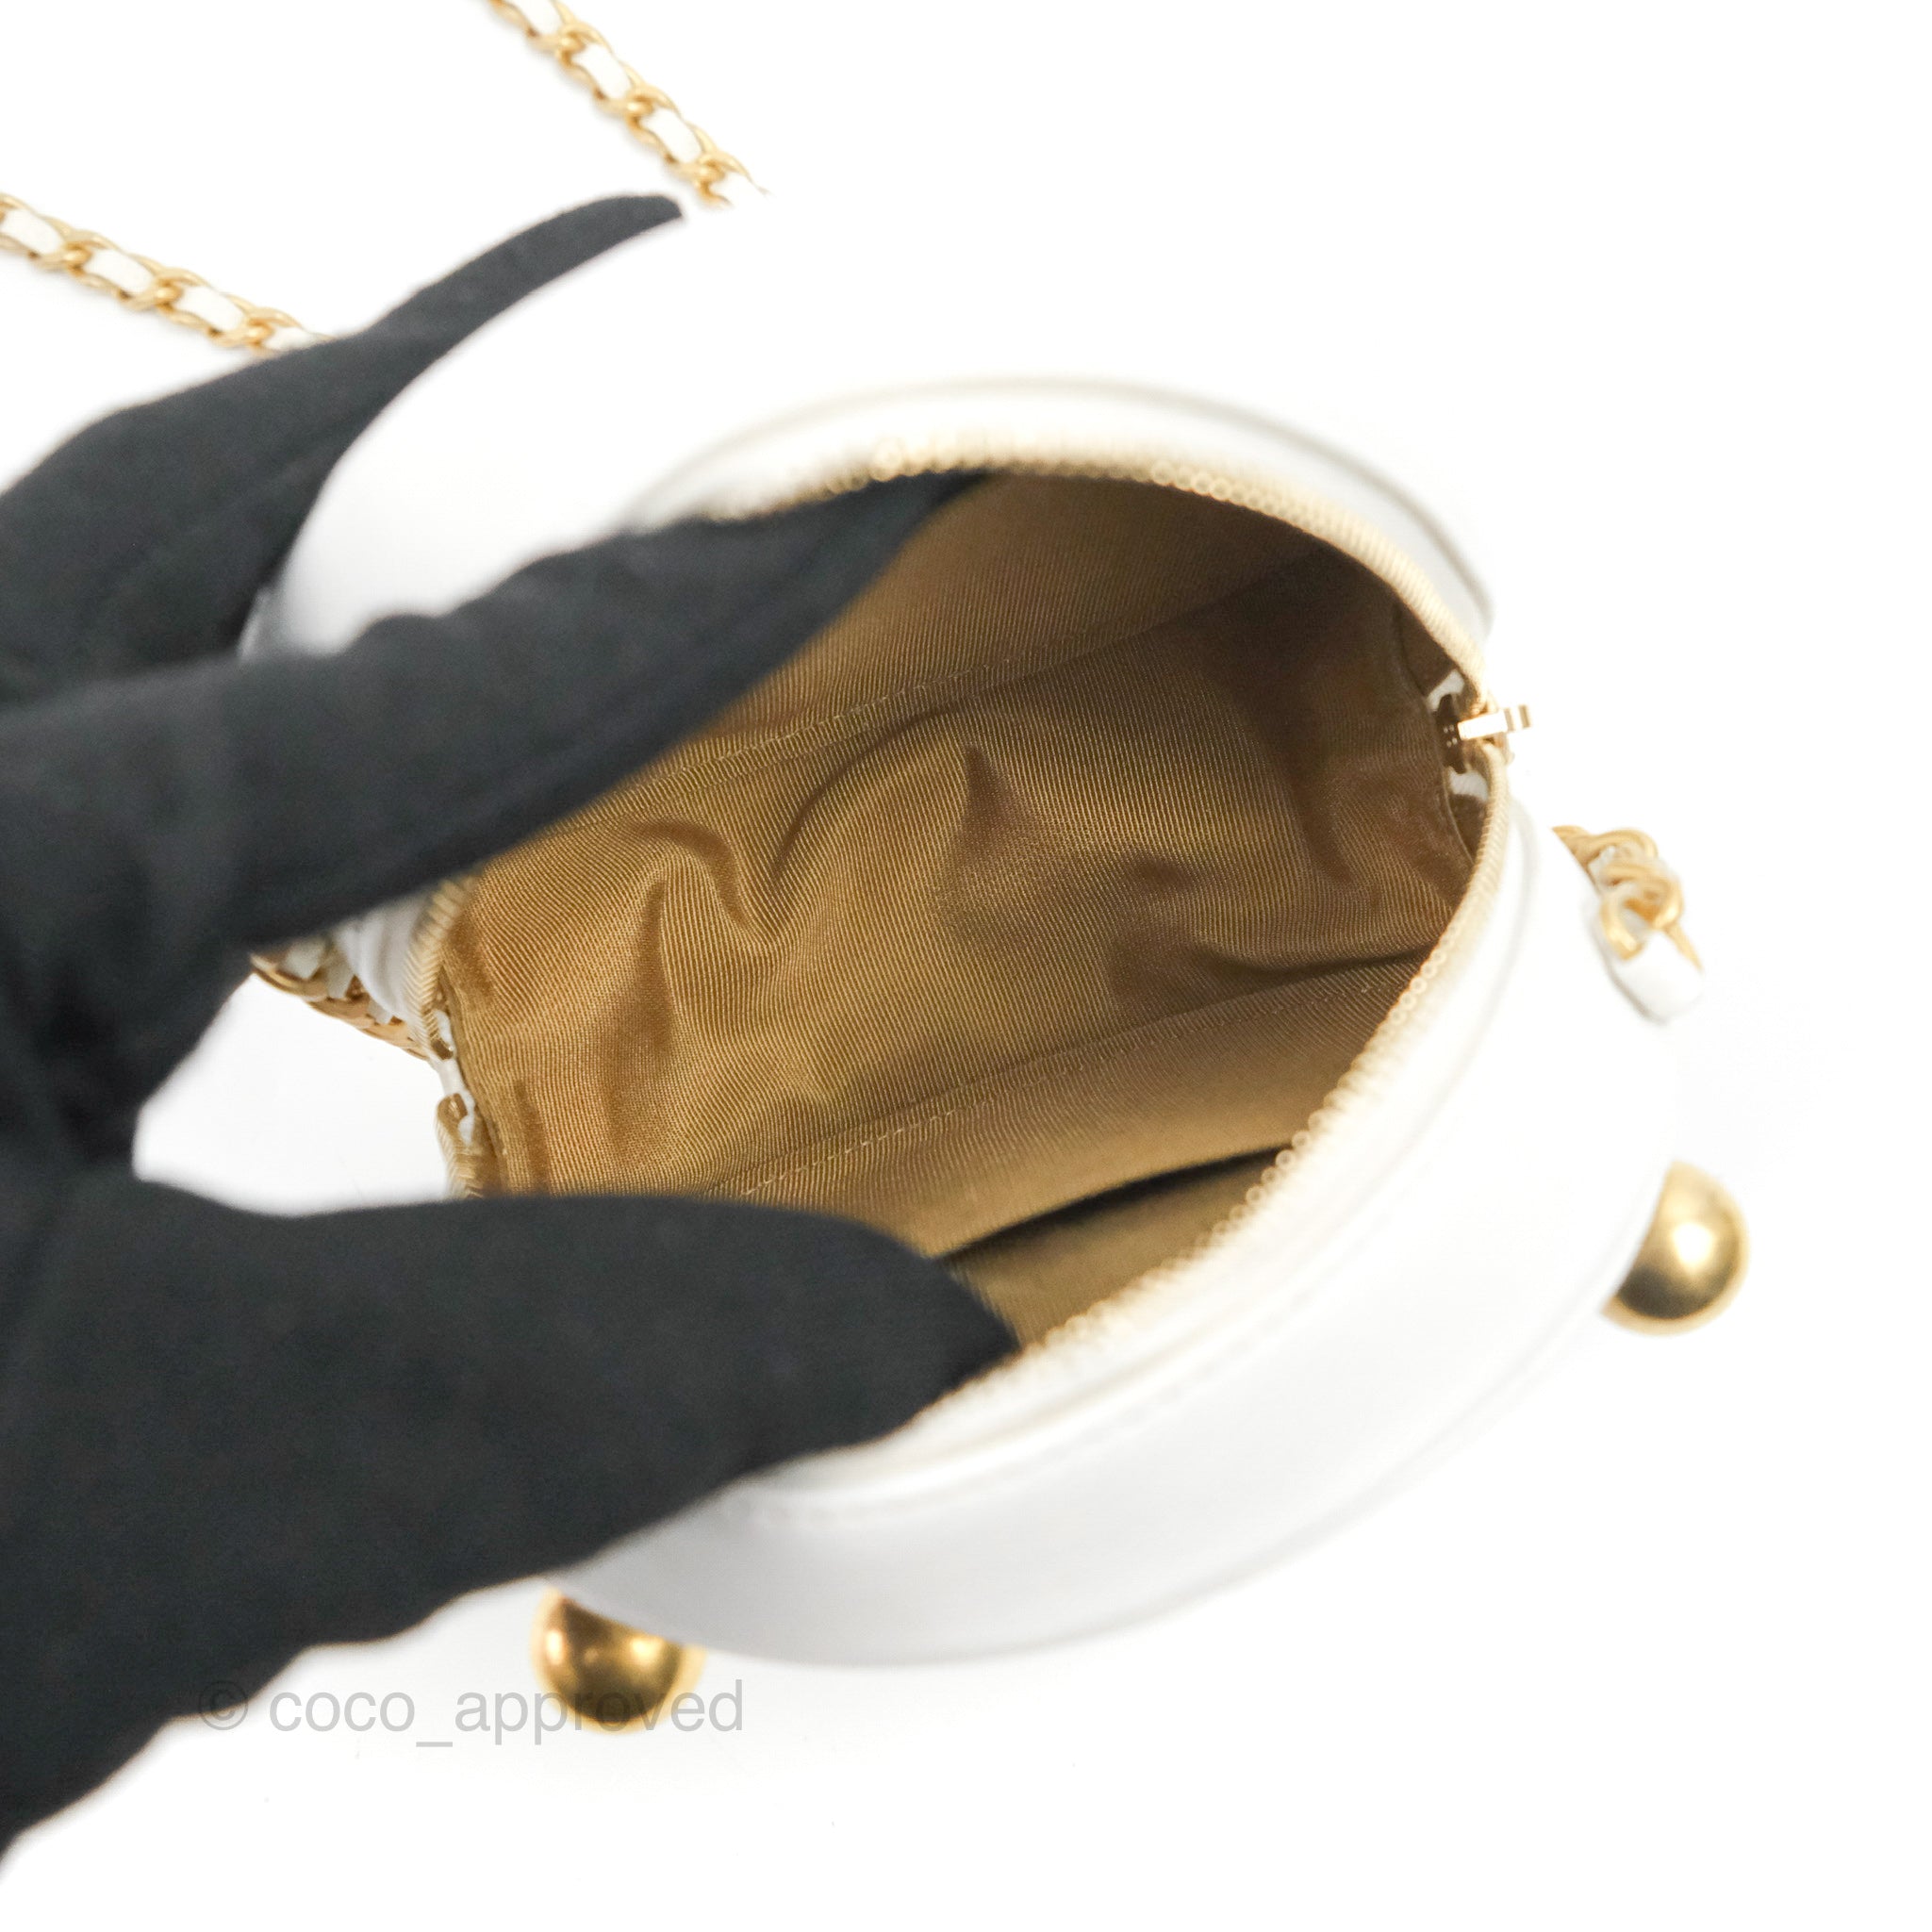 Chanel GWP Gold Ball Shaped Clutch Bag  Chanel clutch bag, Chanel clutch,  Chanel gold hardware